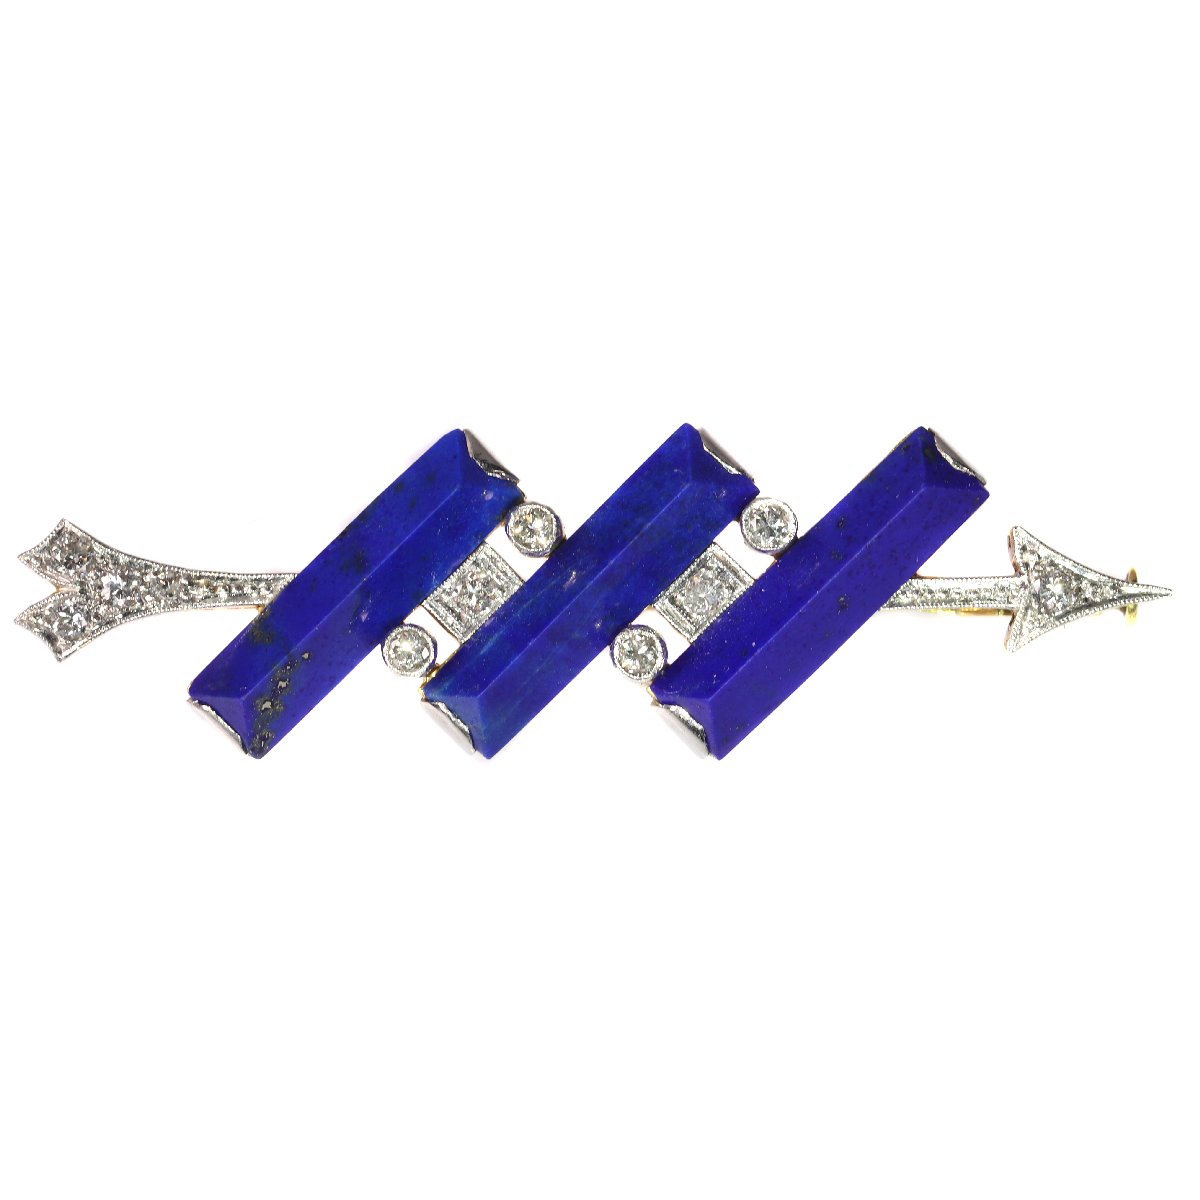 Diamond arrow brooch perforating three solid bars of lapis lazuli